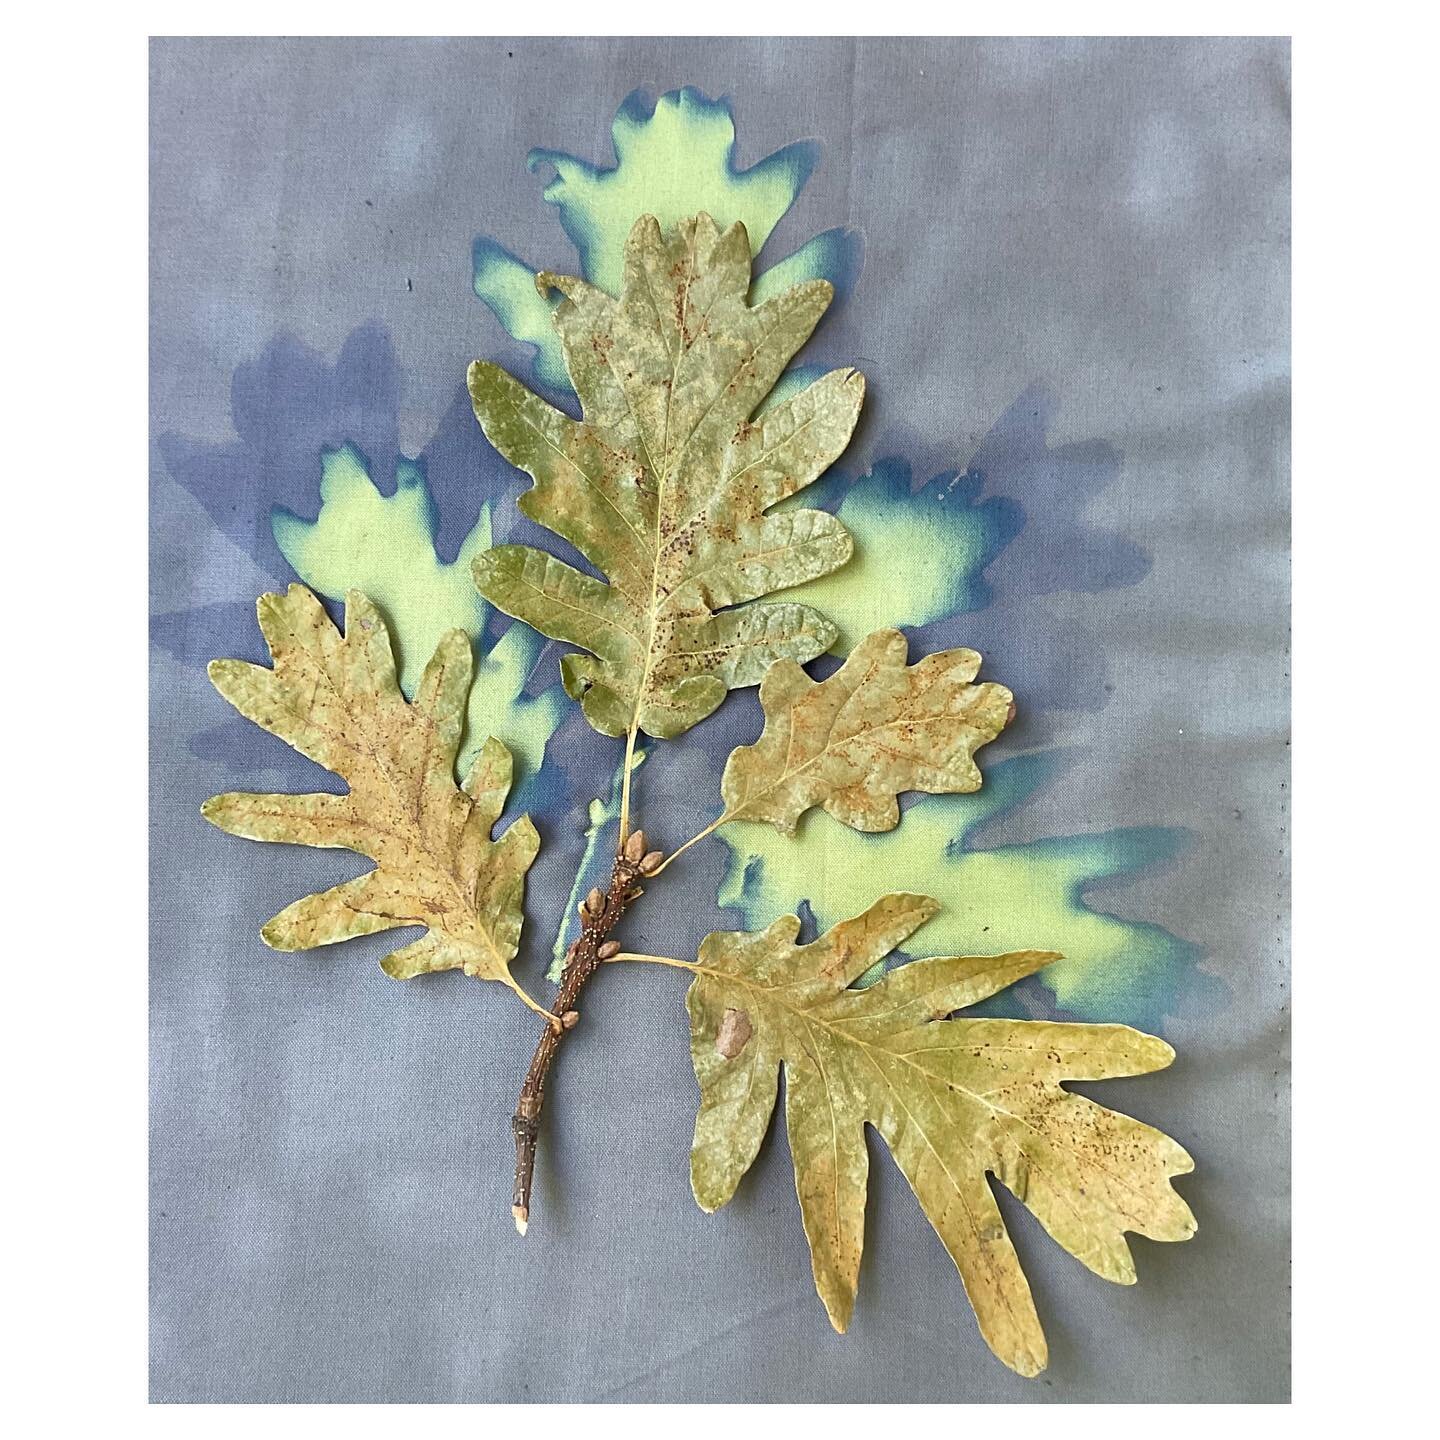 Unprocessed #cyanotype on fabric with the oak leaves see to make it #wip Swipe to see the reverse side

#oak #oakleaf #altphotoarchive #todaysalternative #cyanotypeonfabric #cameraless #solarprint #cyanotypephotography #labclubefoto #processoalternat